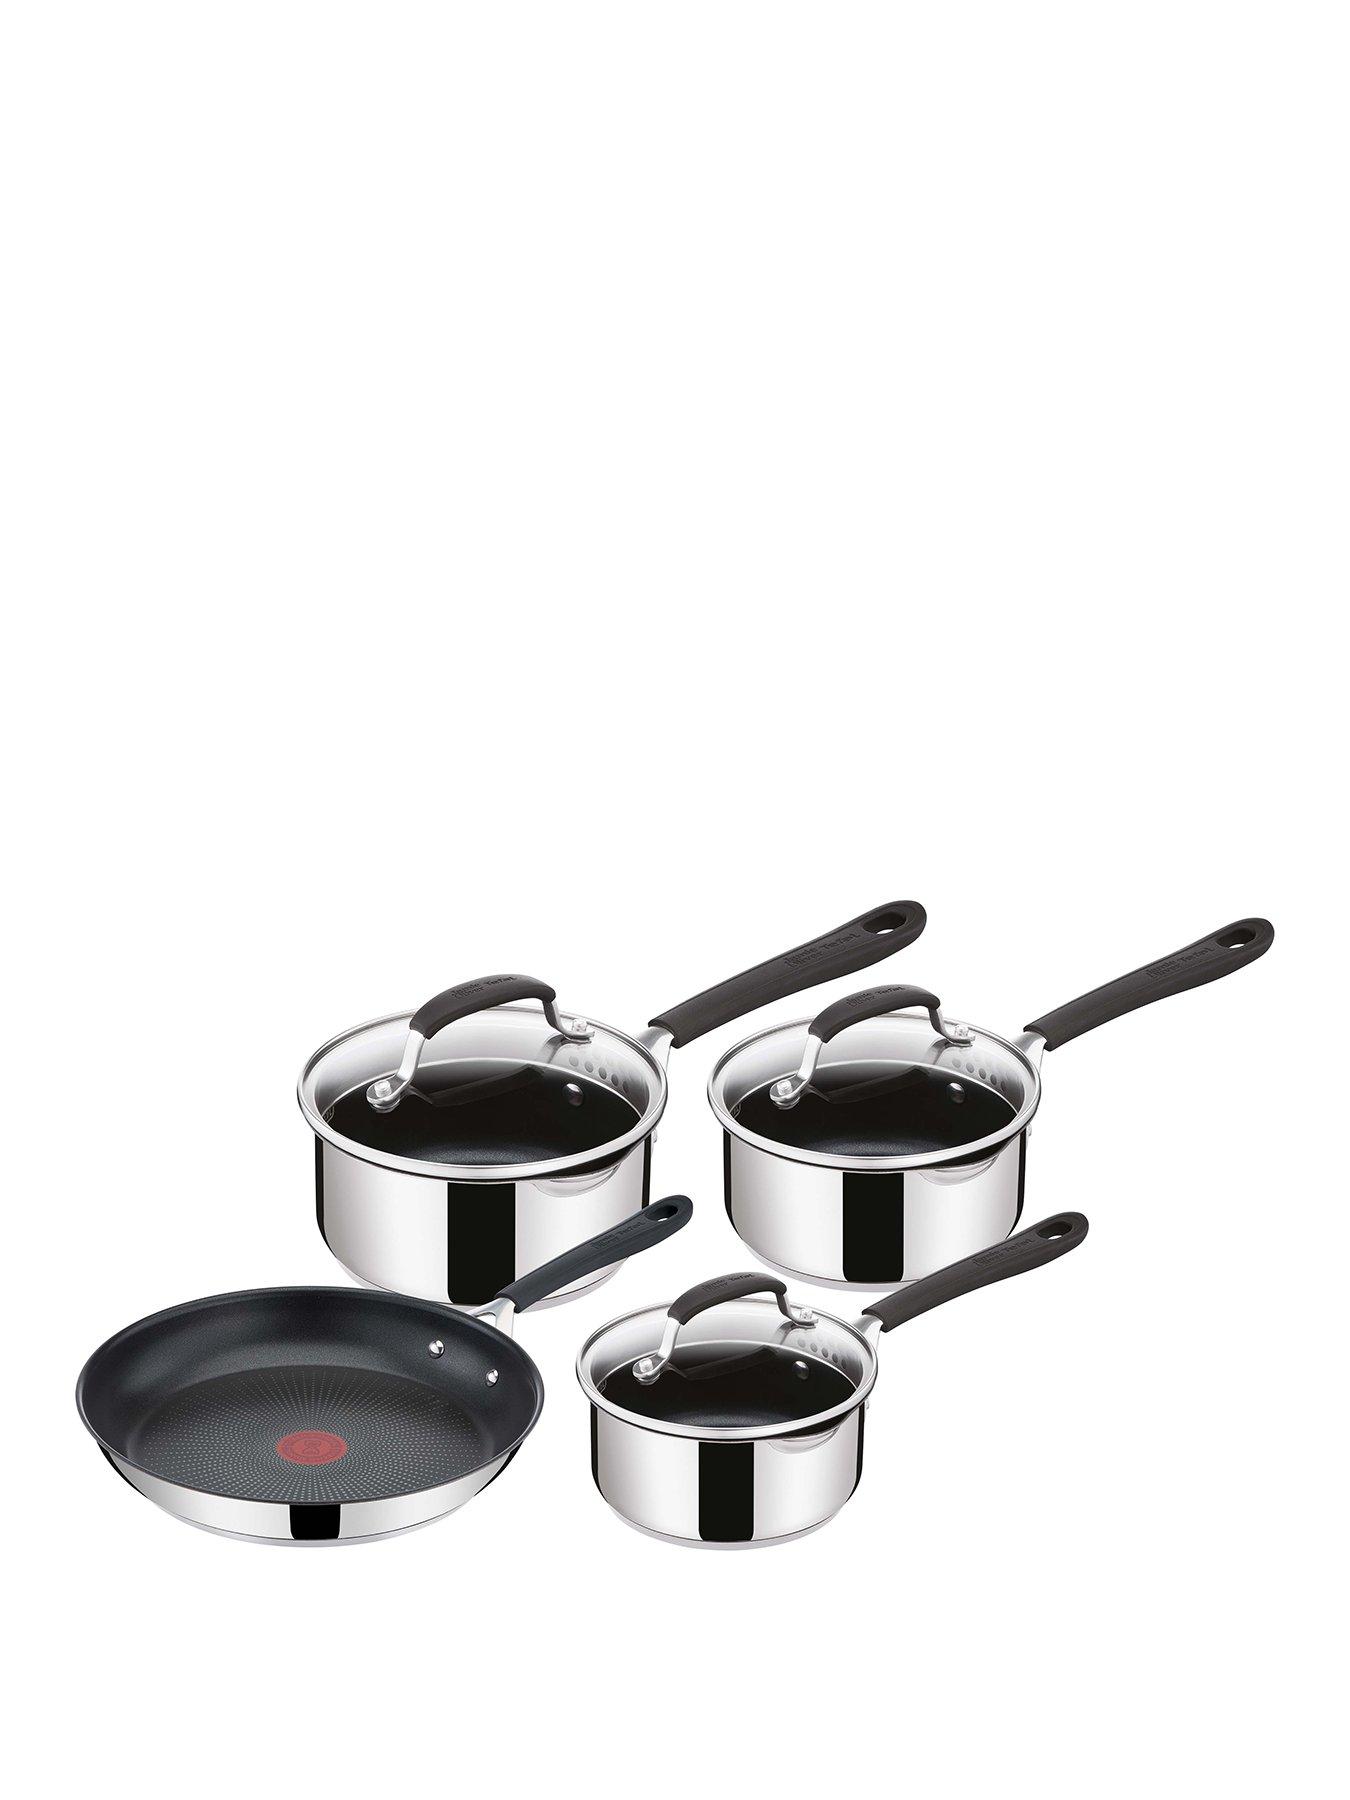 Tefal , Ingenio, Jamie Oliver, Stainless Steel, Cookware Set, Pans